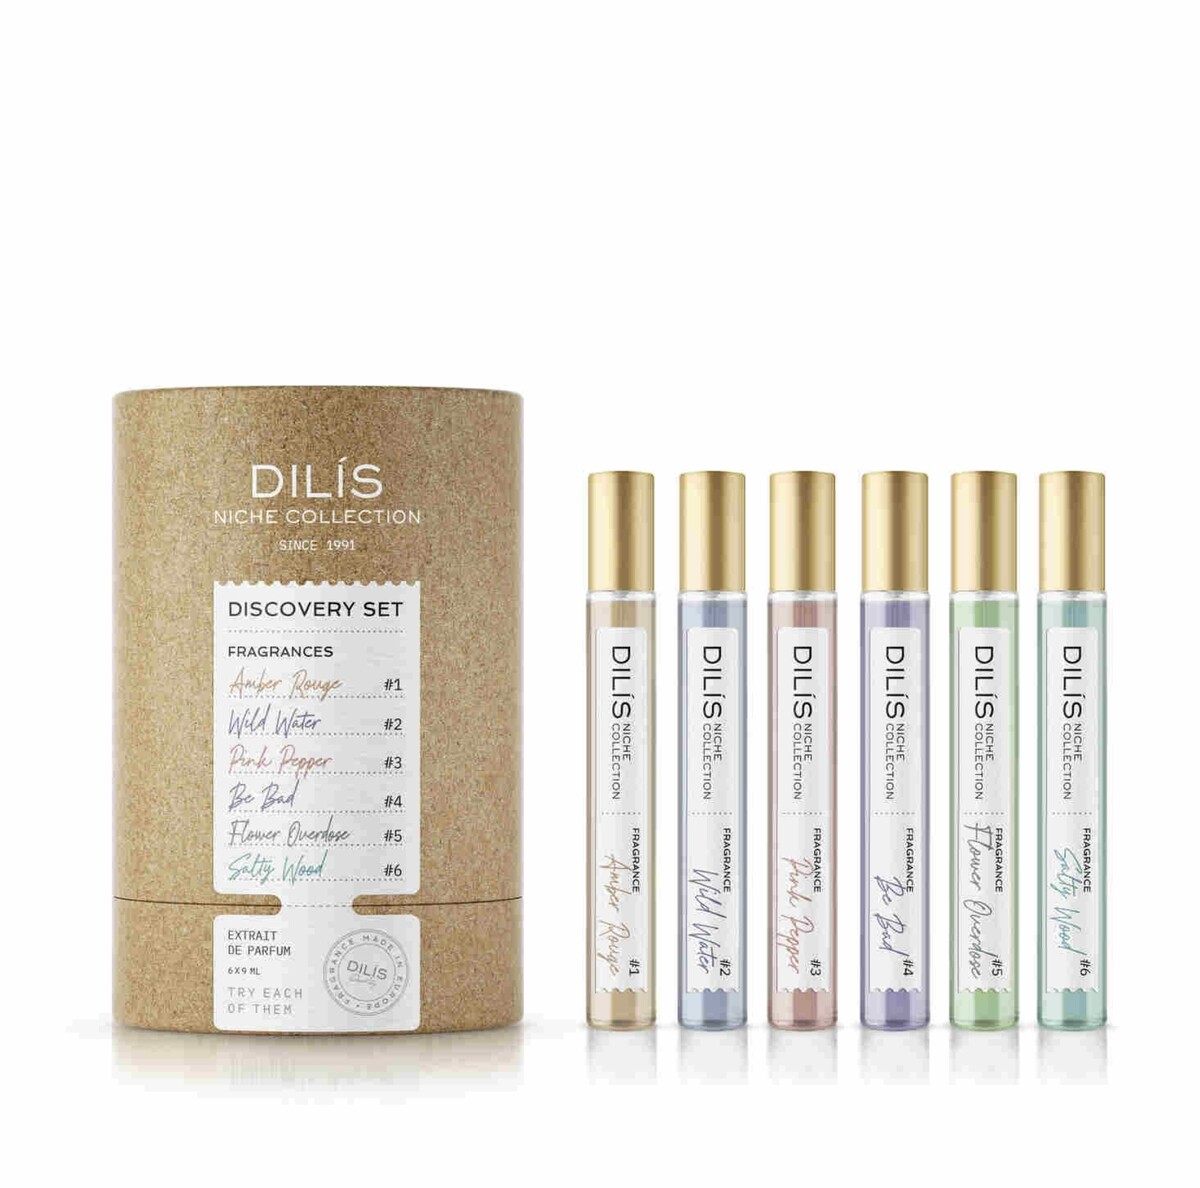 Dilis discovery set dnc духи для женщин парфюмерный набор (6*9мл) 54мл fénomène muse духи группы для женщин 75мл